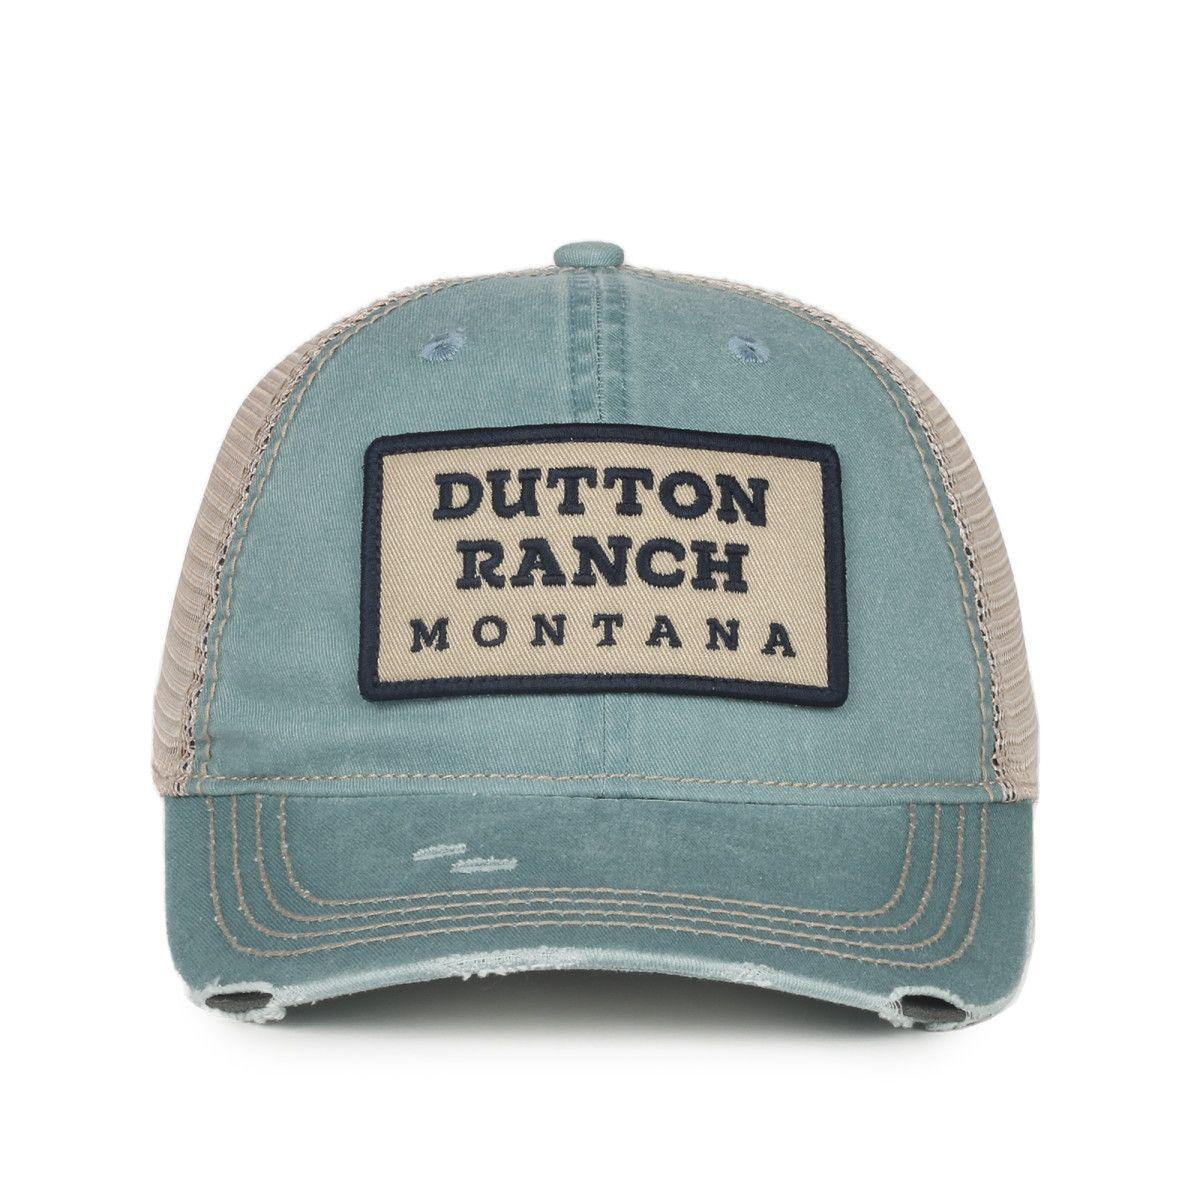 Wrangler Yellowstone Dutton Ranch Montana Cap - Leapfrog Outdoor Sports and Apparel